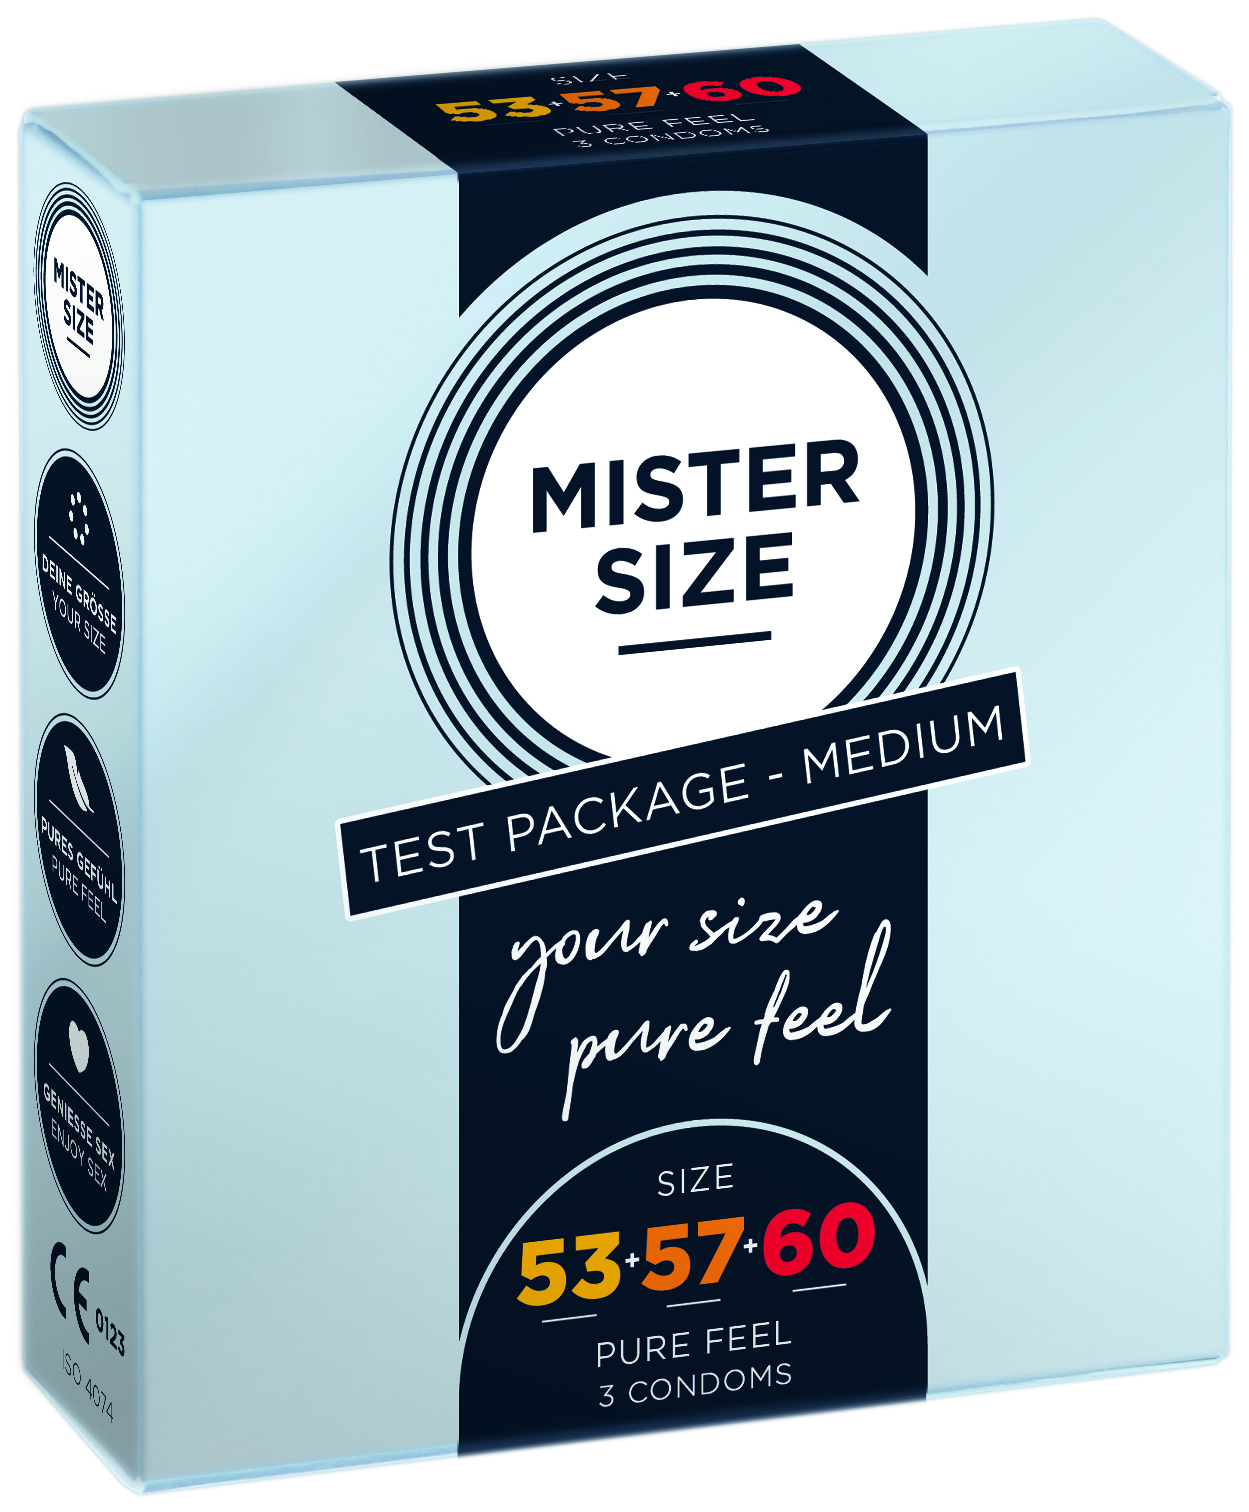 Mister Size Test Pack 53-57-60